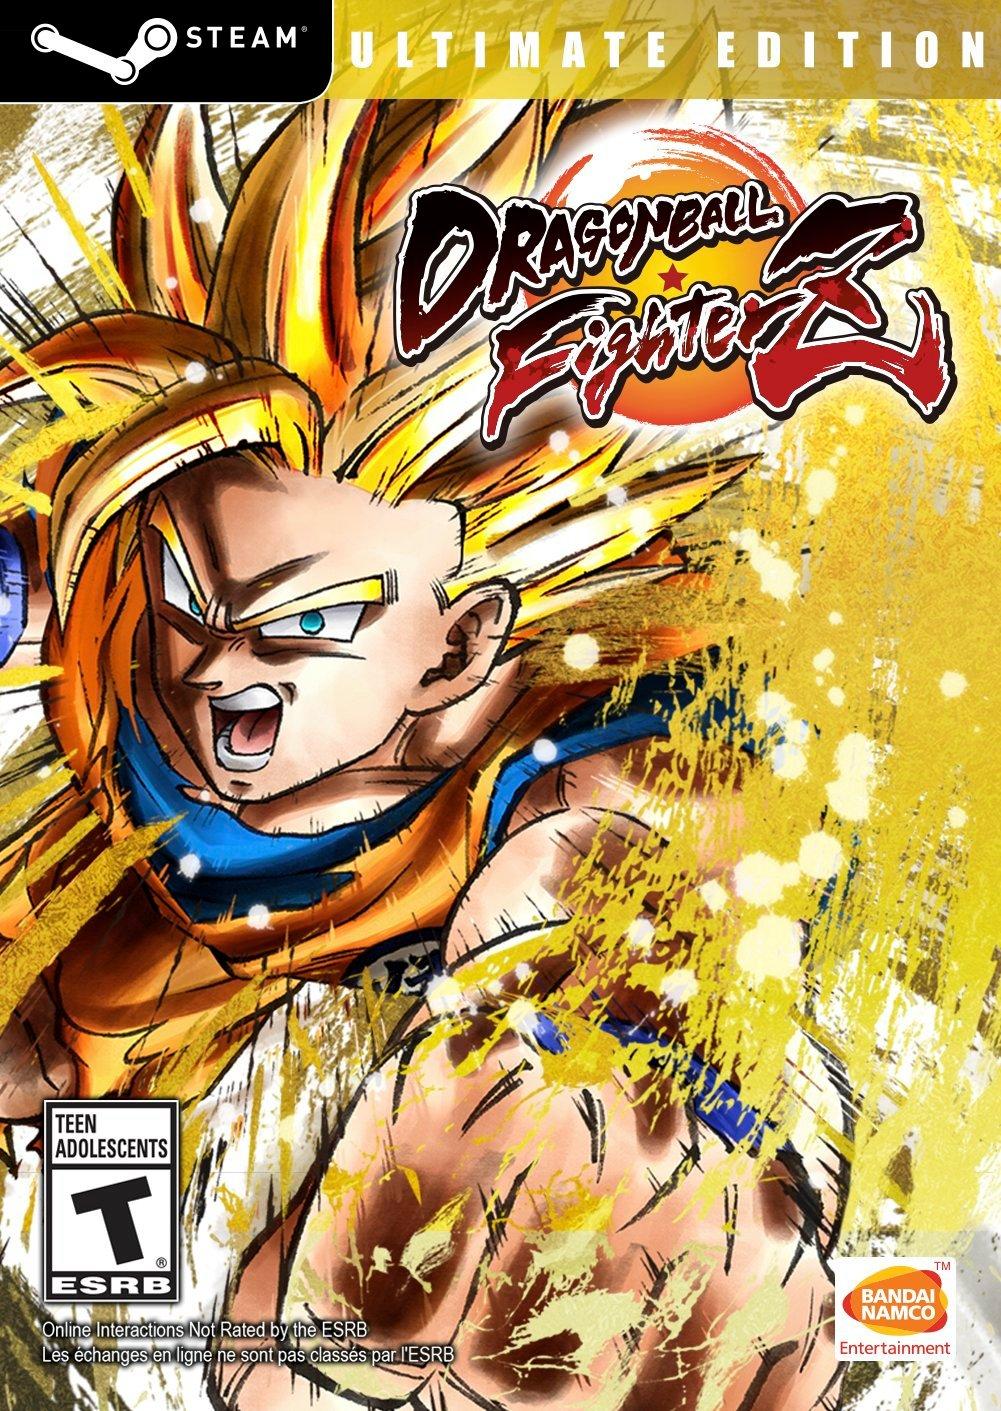 DRAGON BALL FIGHTERZ - Goku for Nintendo Switch - Nintendo Official Site